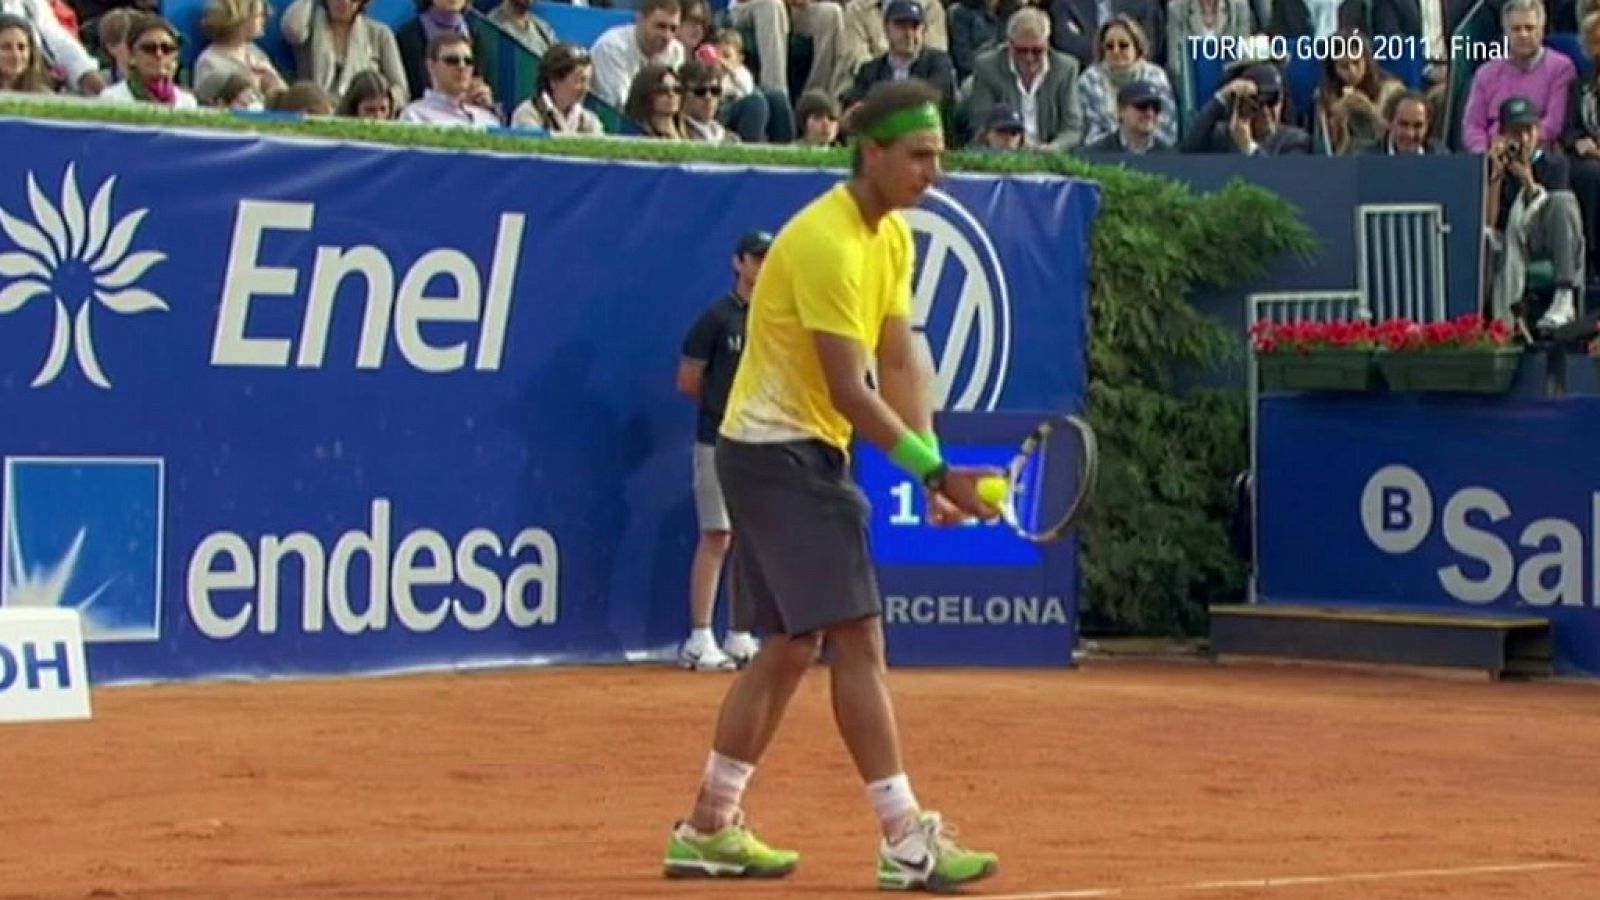 Tenis - Torneo Godó 2011. Final: Rafa Nadal - David Ferrer. Desde Barcelona - RTVE.es